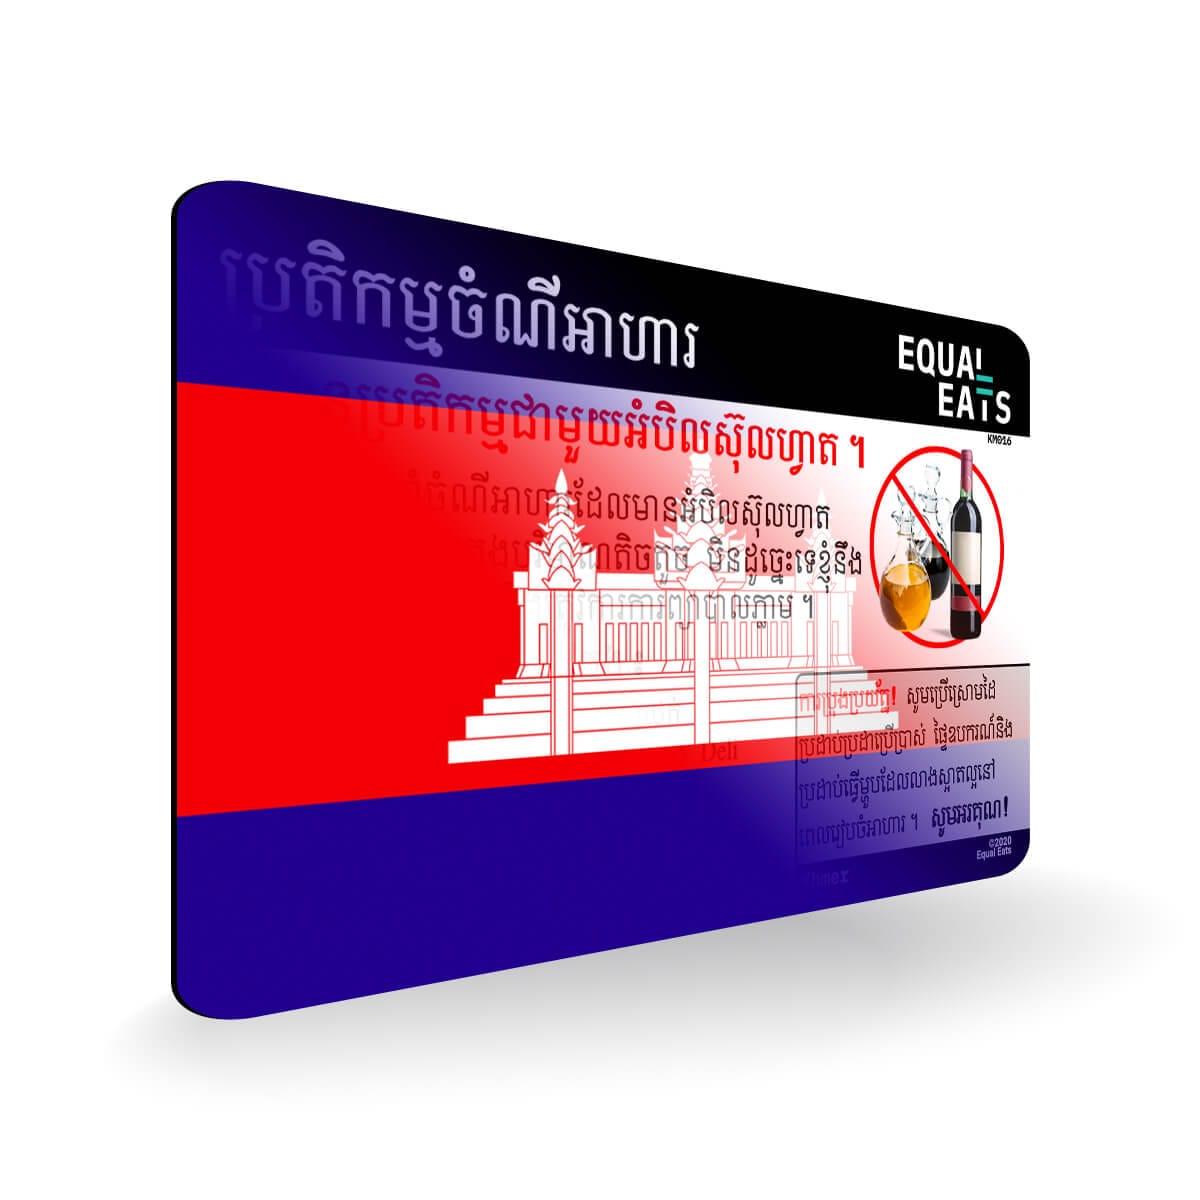 Sulfite Allergy in Khmer. Sulfite Allergy Card for Cambodia